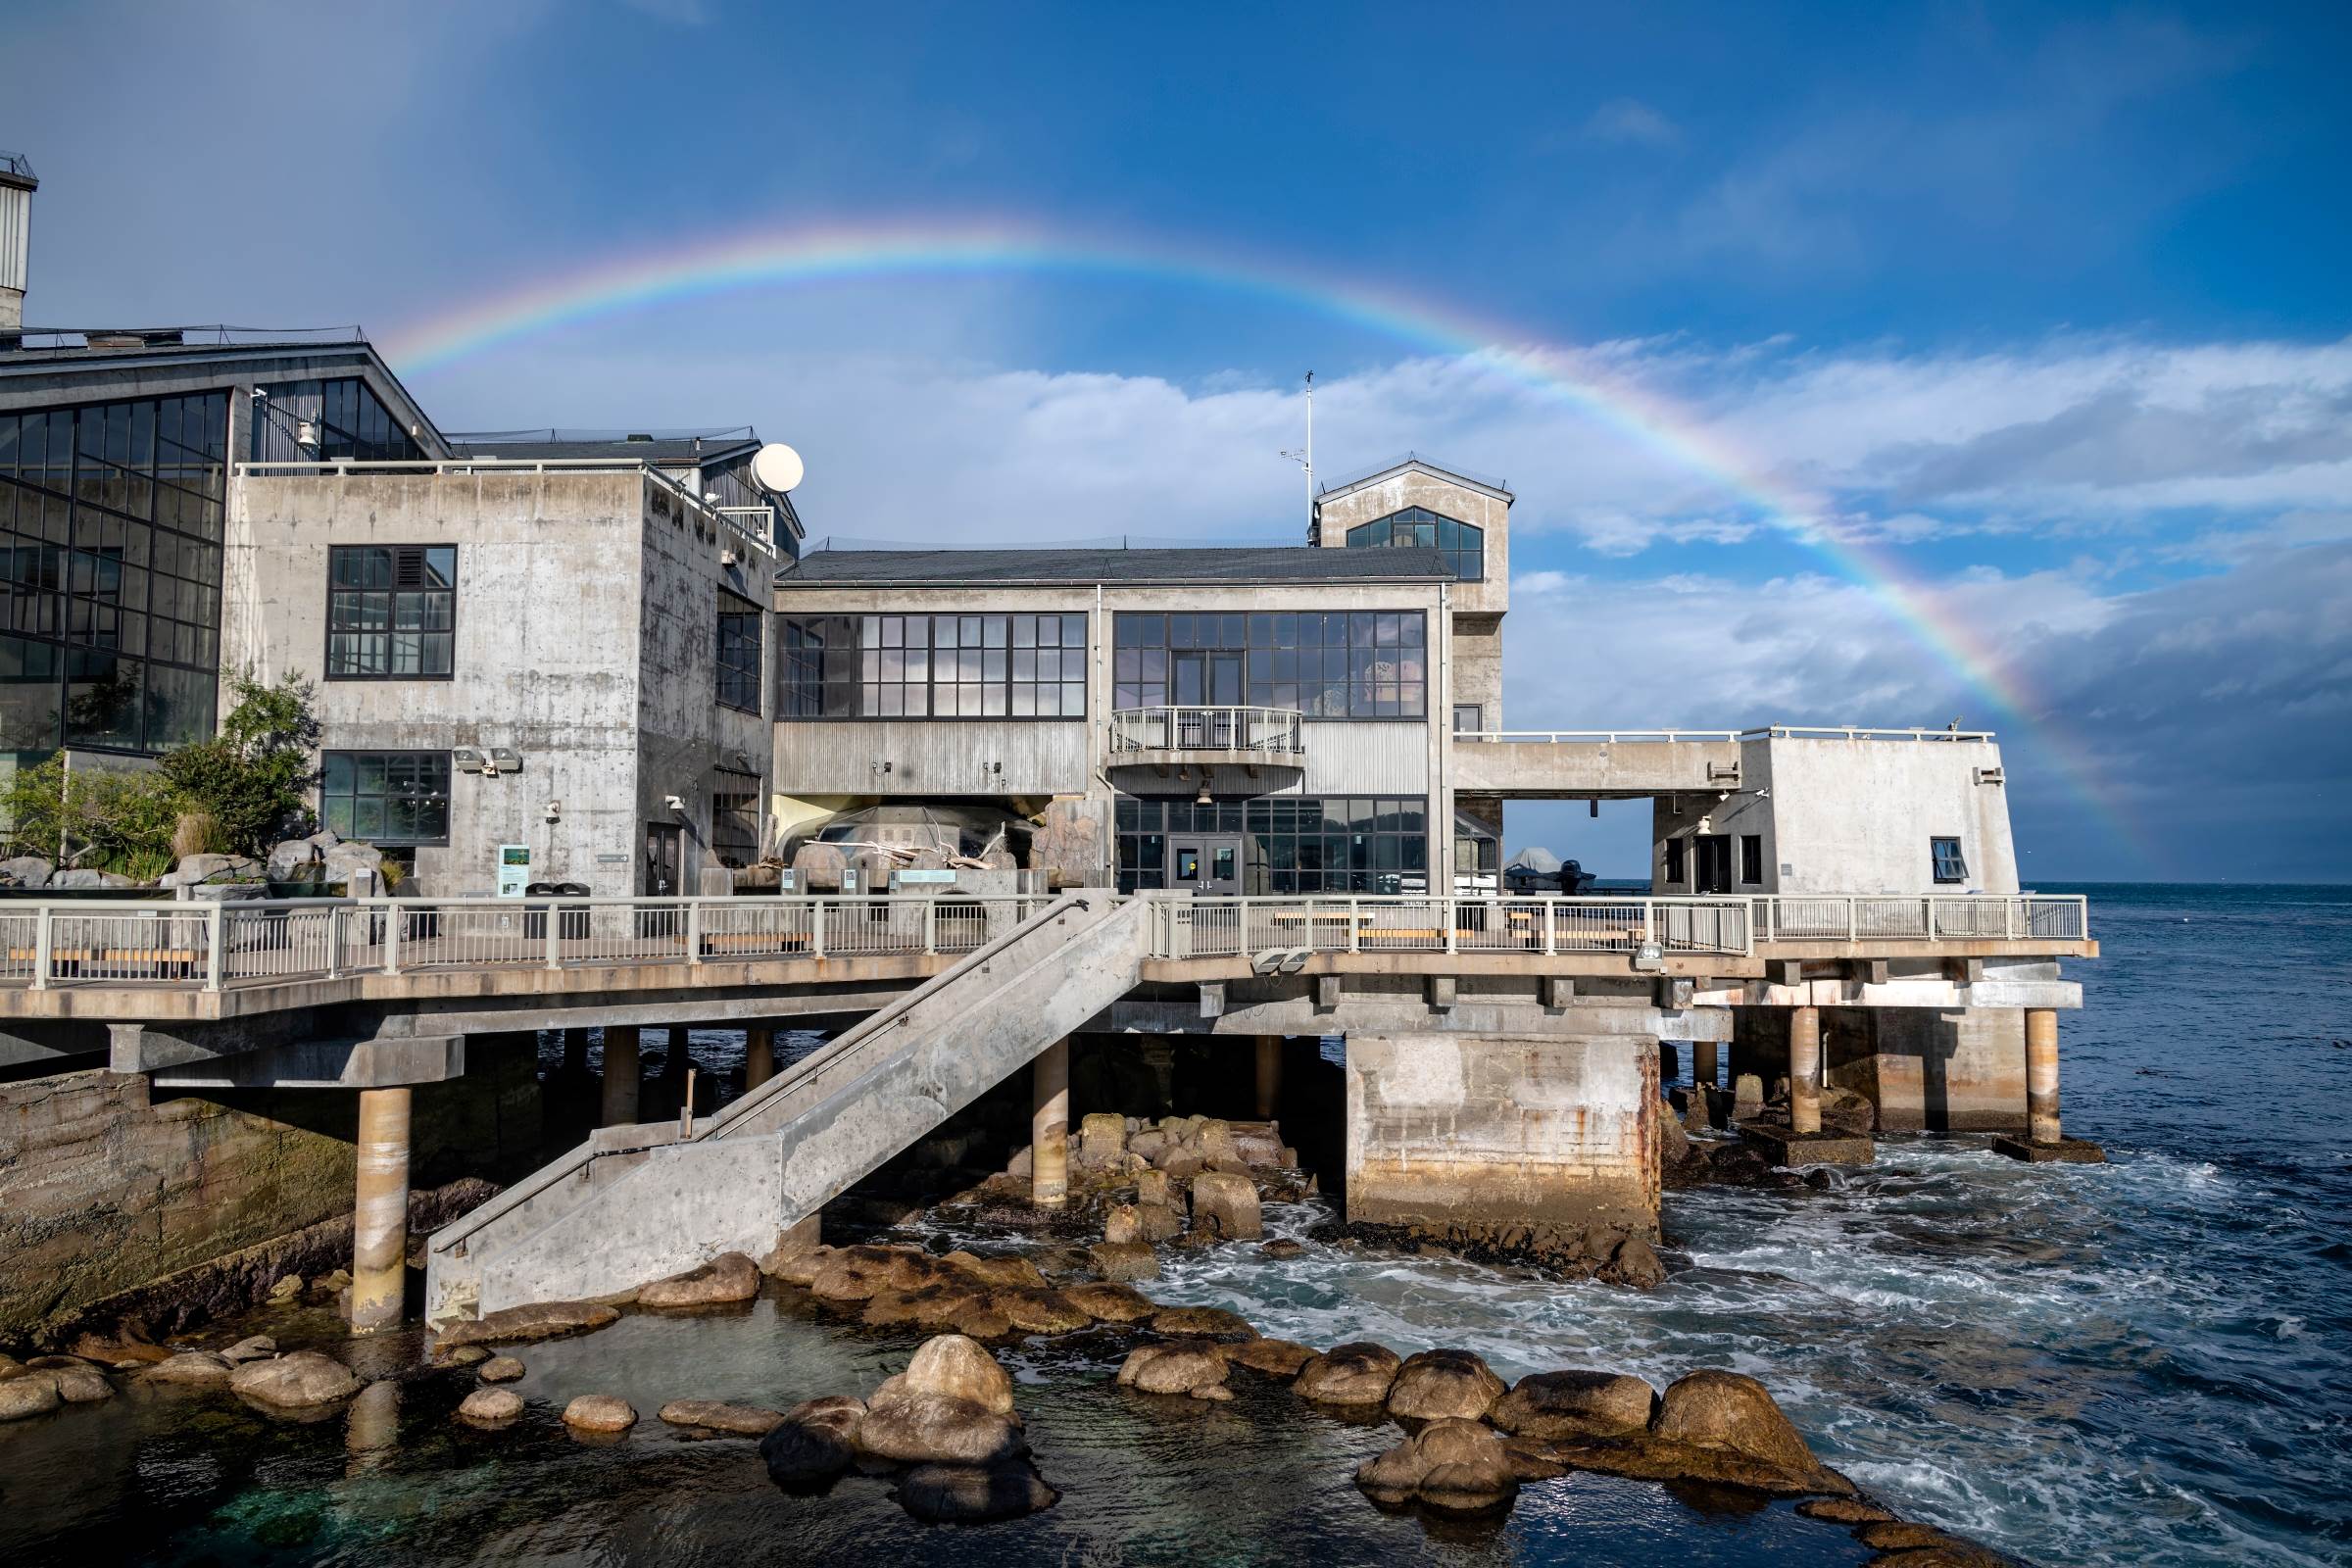 Exterior view - Tr20 0026   Rainbow Over The Monterey Bay Aquarium During Stormy Weather. Monterey Bay Aquarium